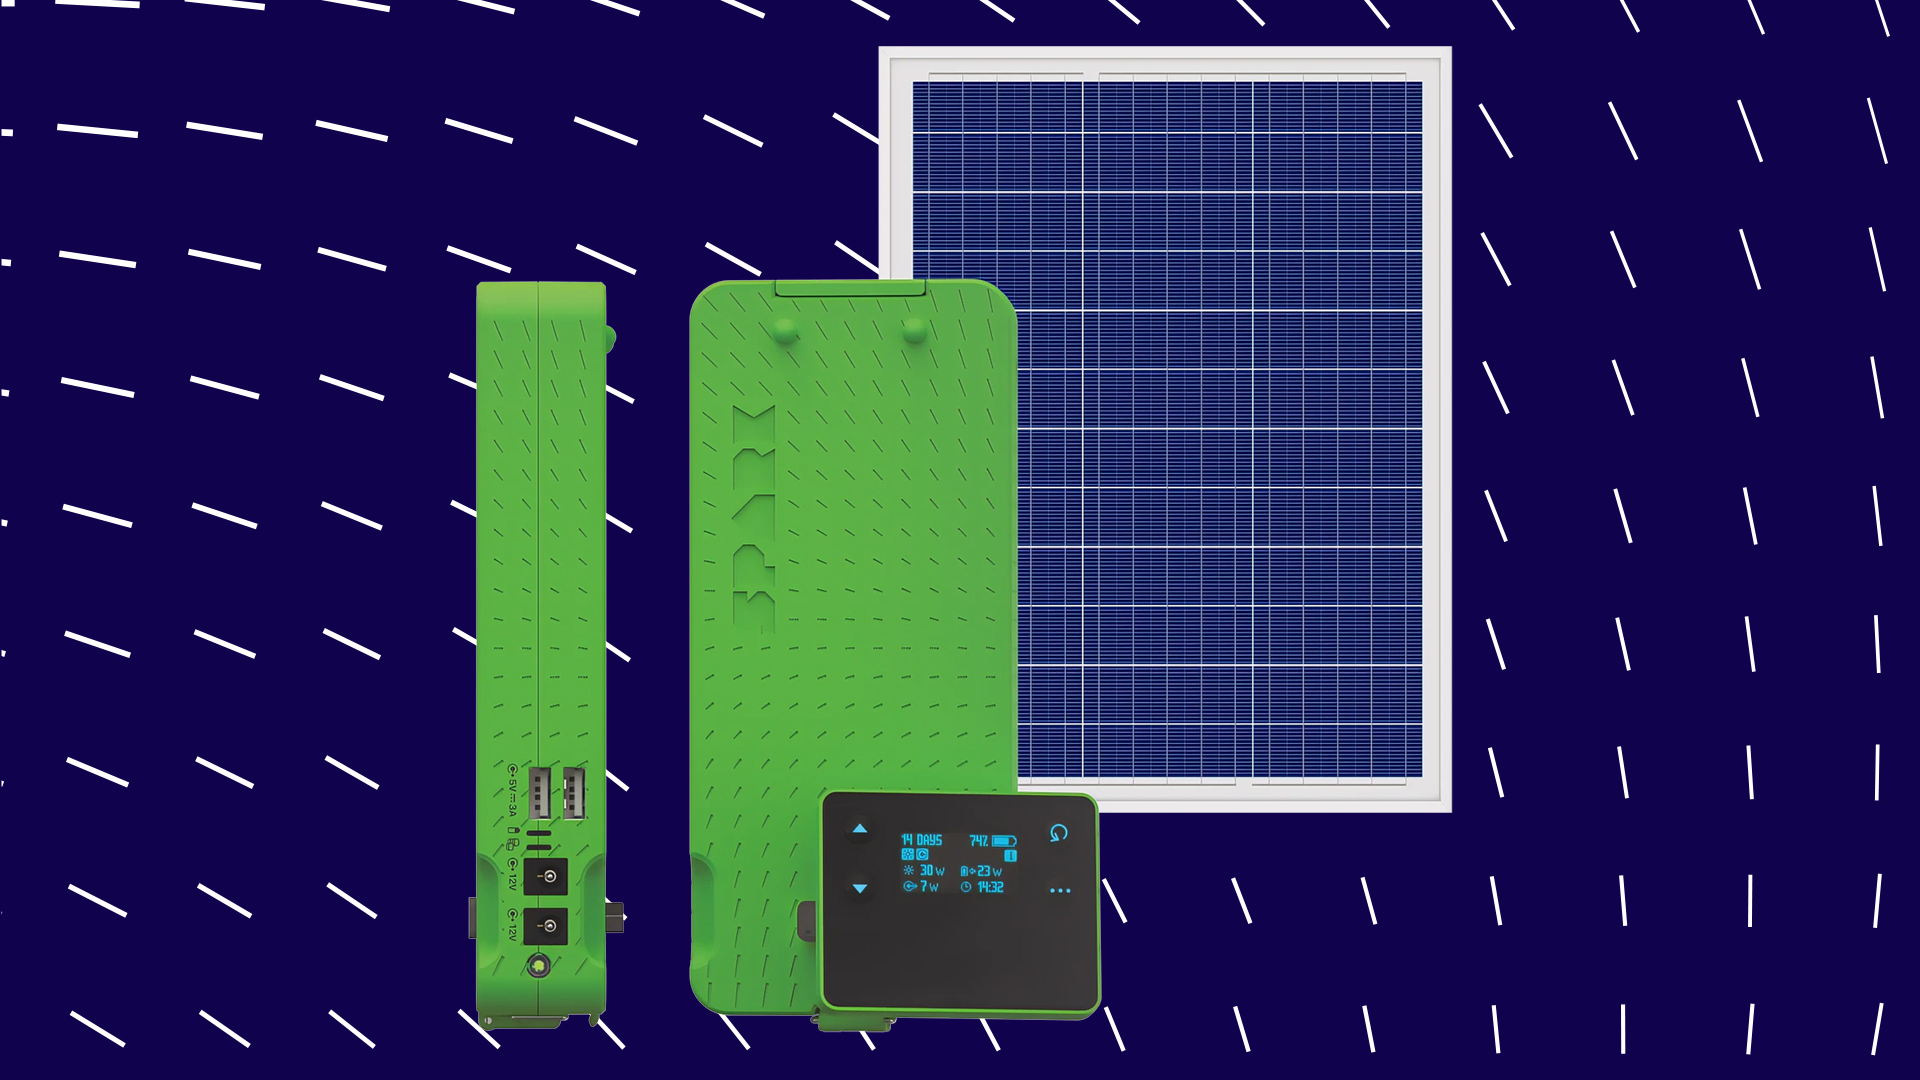 Solar Kits